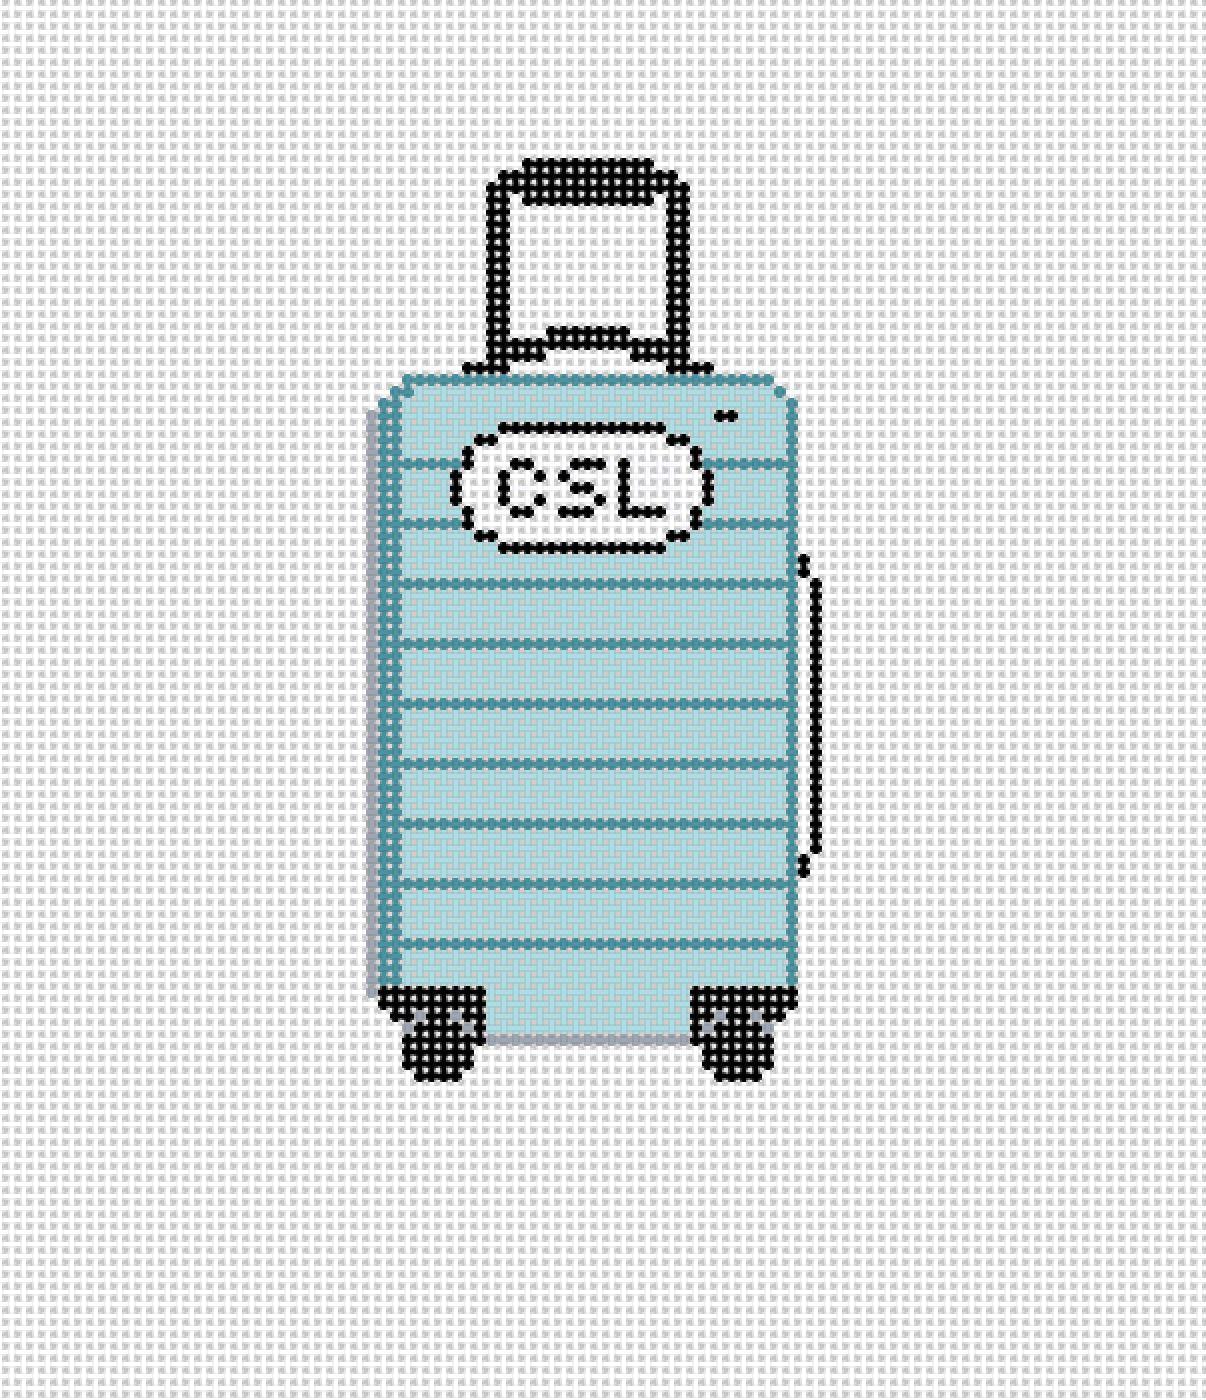 Travel Suitcase 2.0 Needlepoint Canvas - Needlepoint by Laura